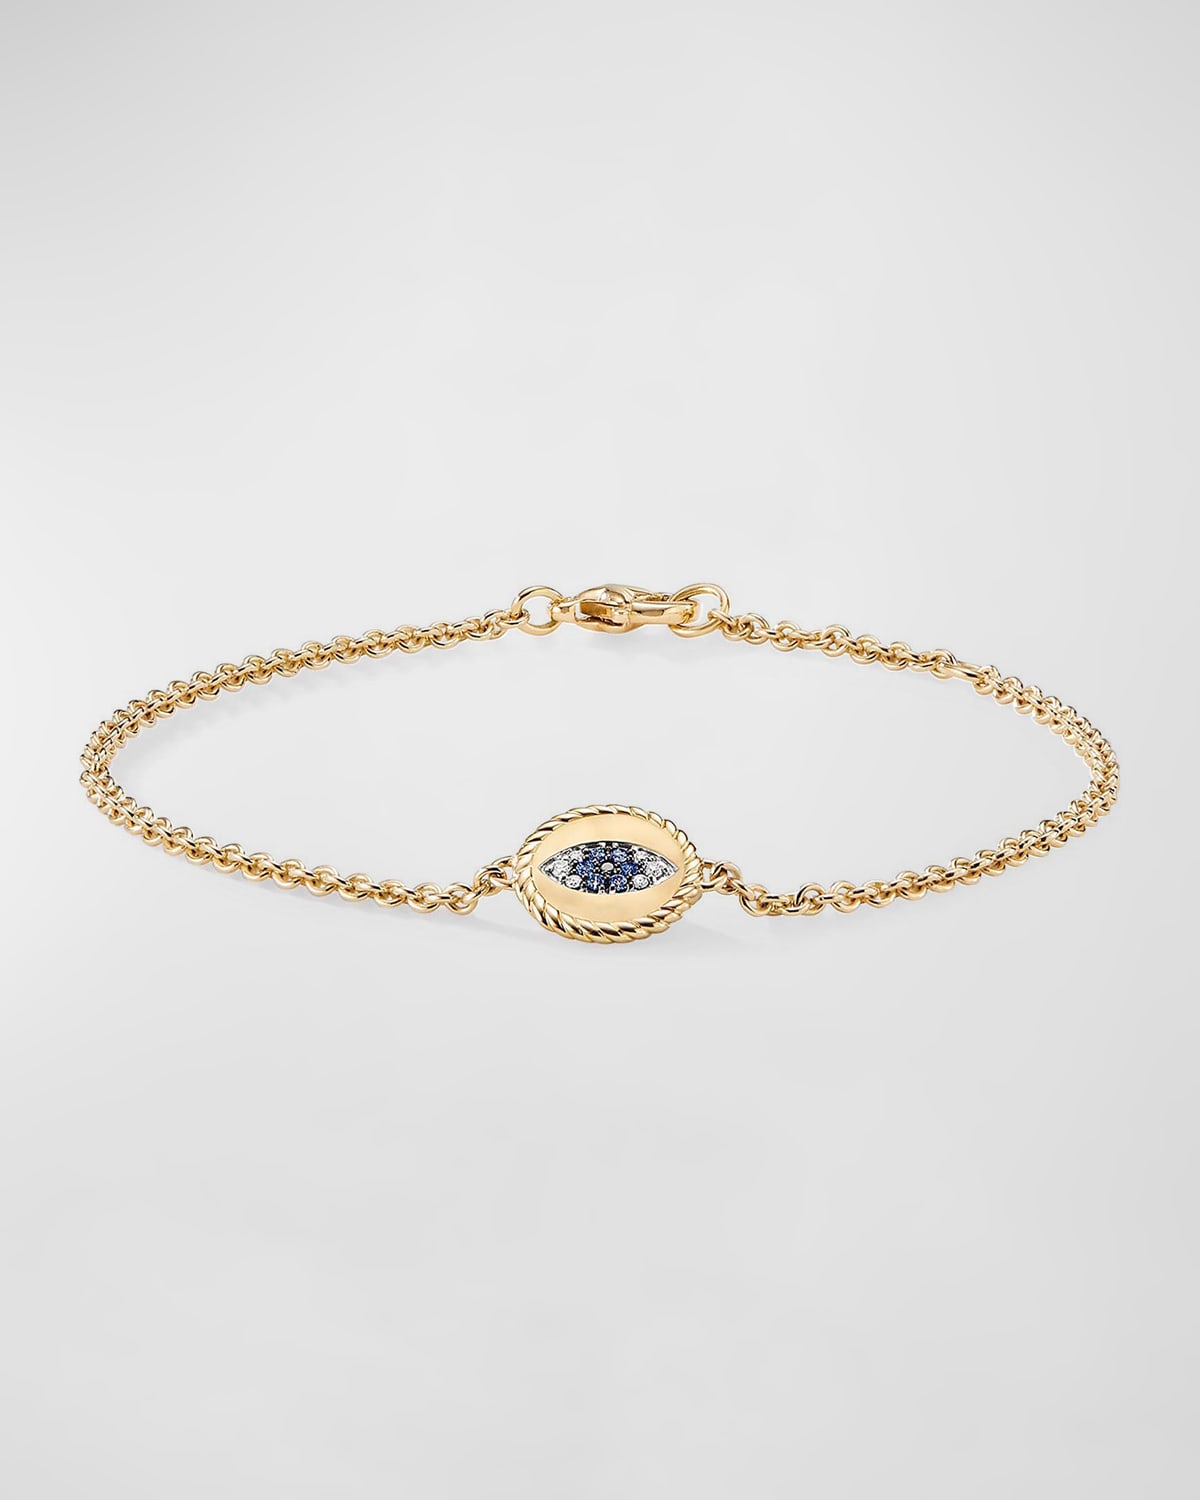 Evil Eye Charm Bracelet with Sapphires and Diamonds, Adjustable